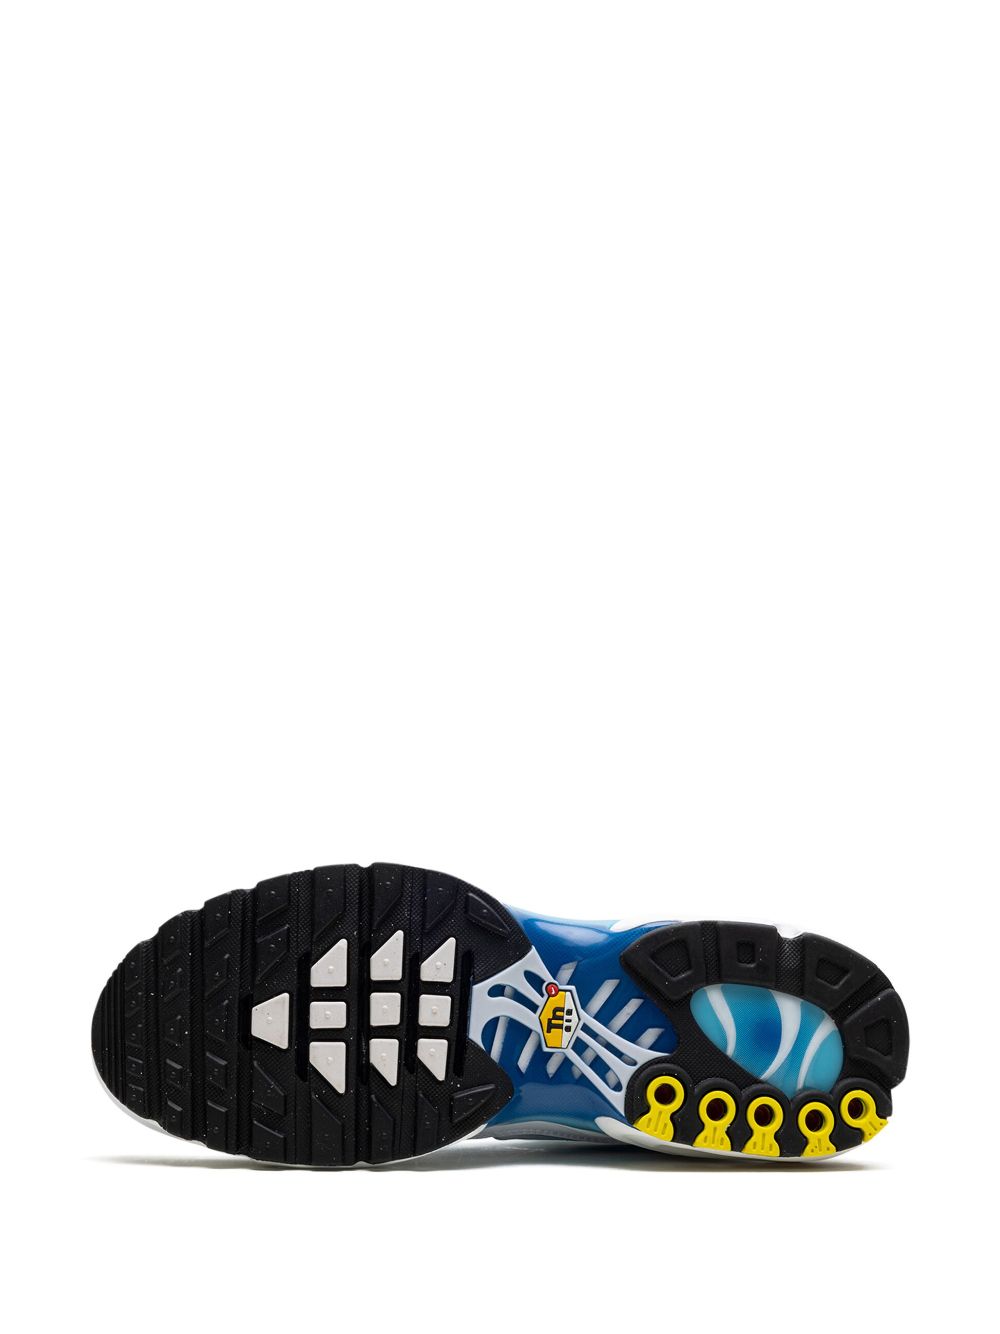 Shop Nike Air Max Plus "blue Gaze" Sneakers